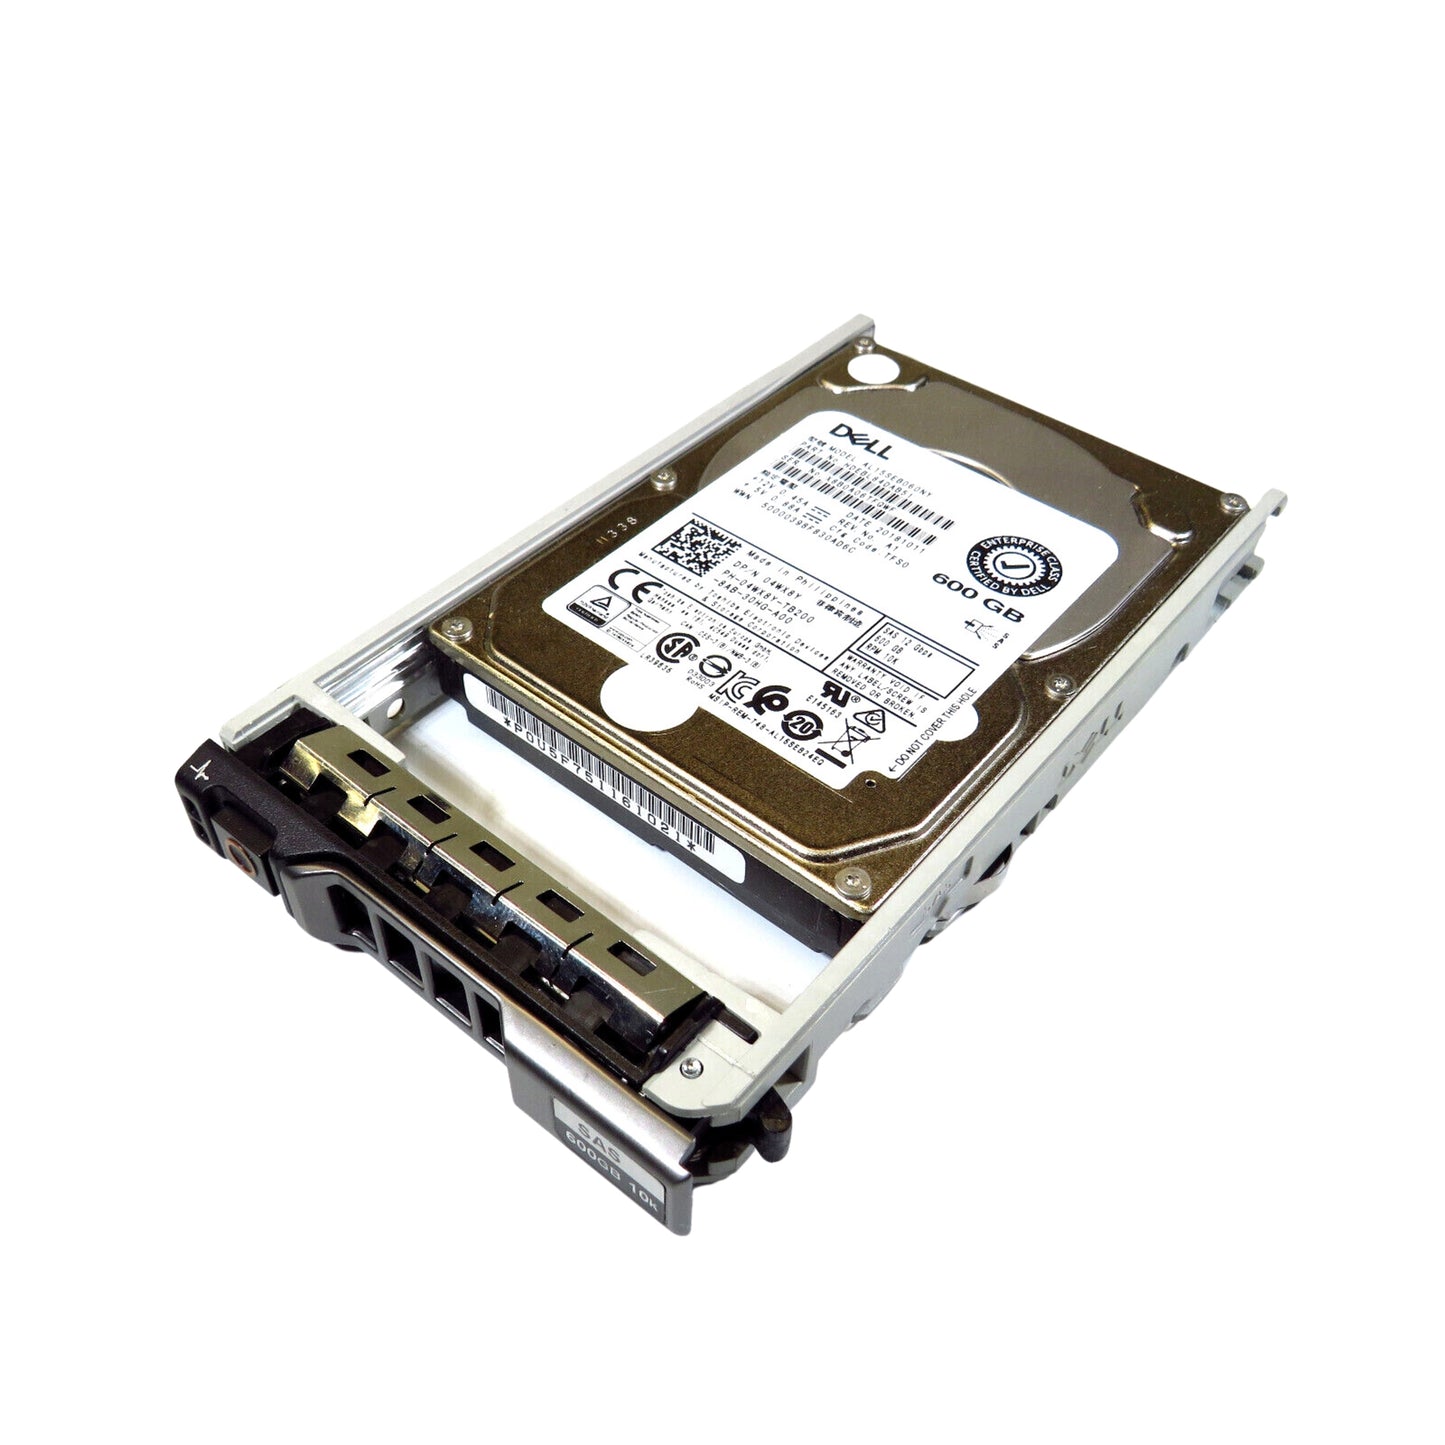 Dell 4WX8Y 2.5" 600GB 10000RPM SAS 12Gb/s Hard Disk Drive (HDD), Silver (Refurbished)